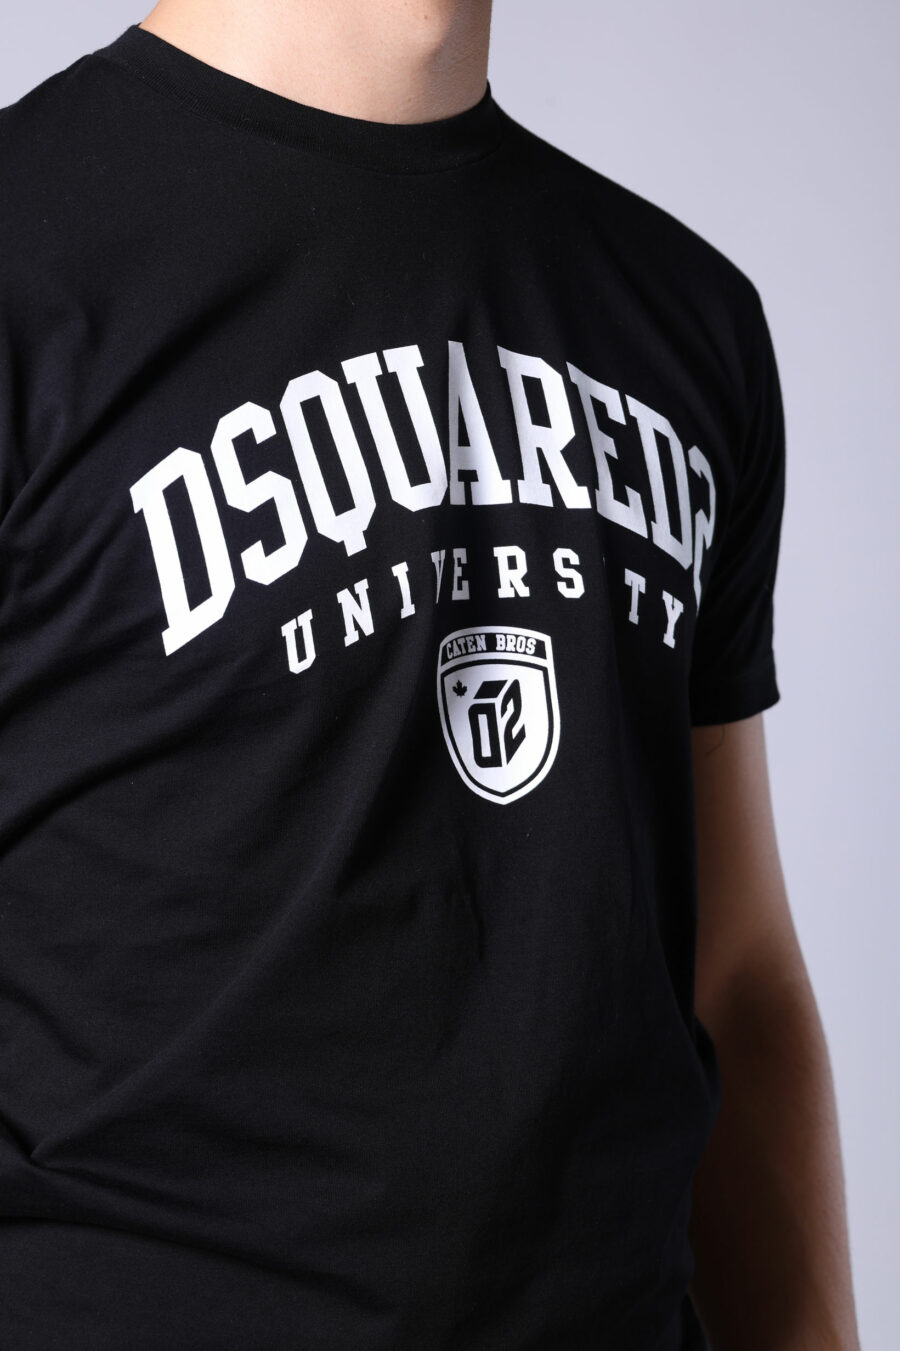 Camiseta negra con maxilogo "university" blanco - Untitled Catalog 05240